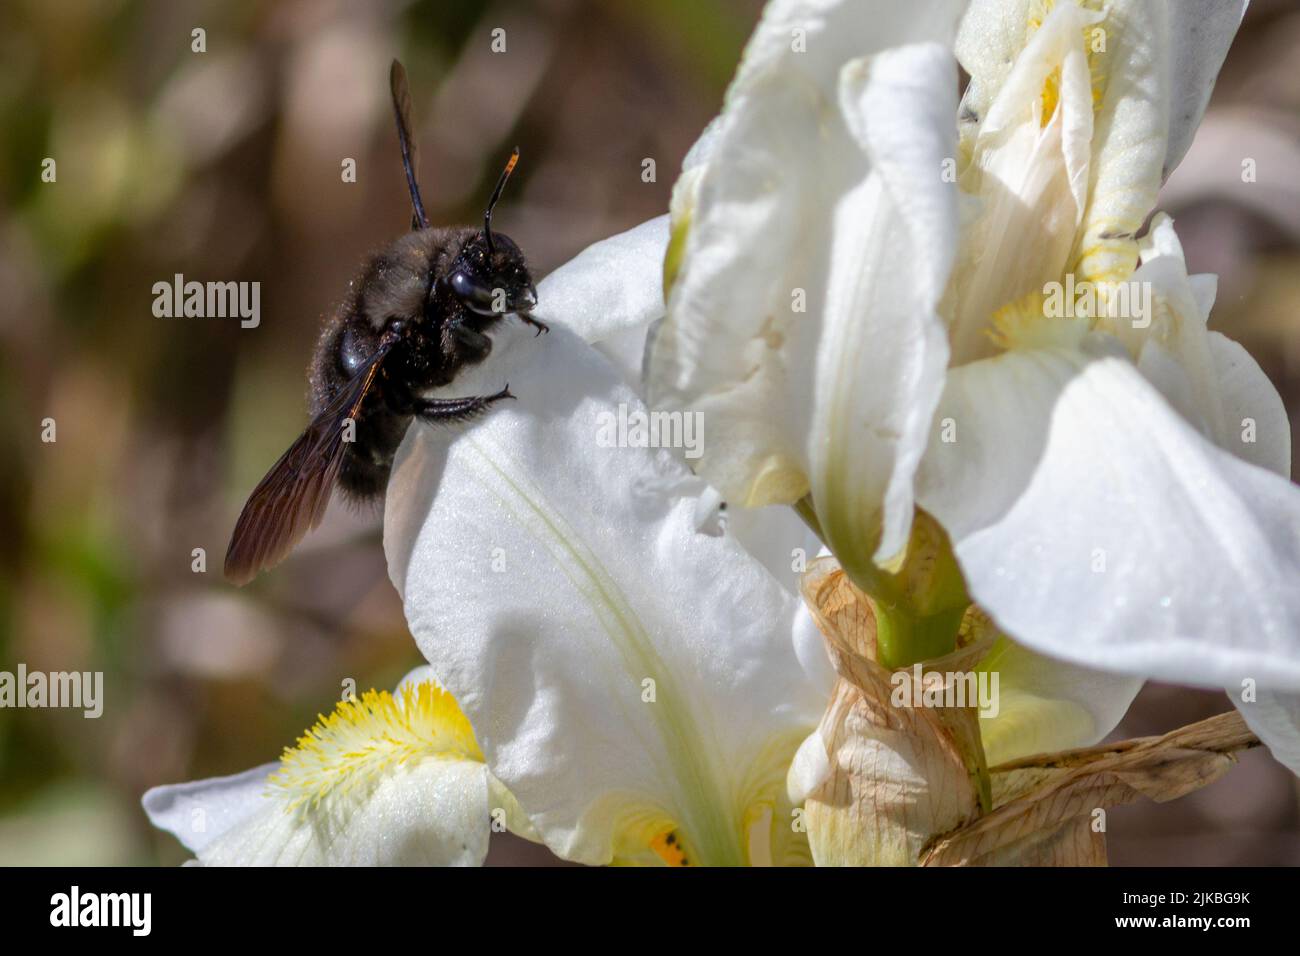 Xylocopa violacea, Violet Carpenter Bee on a White Iris Flower Stock Photo